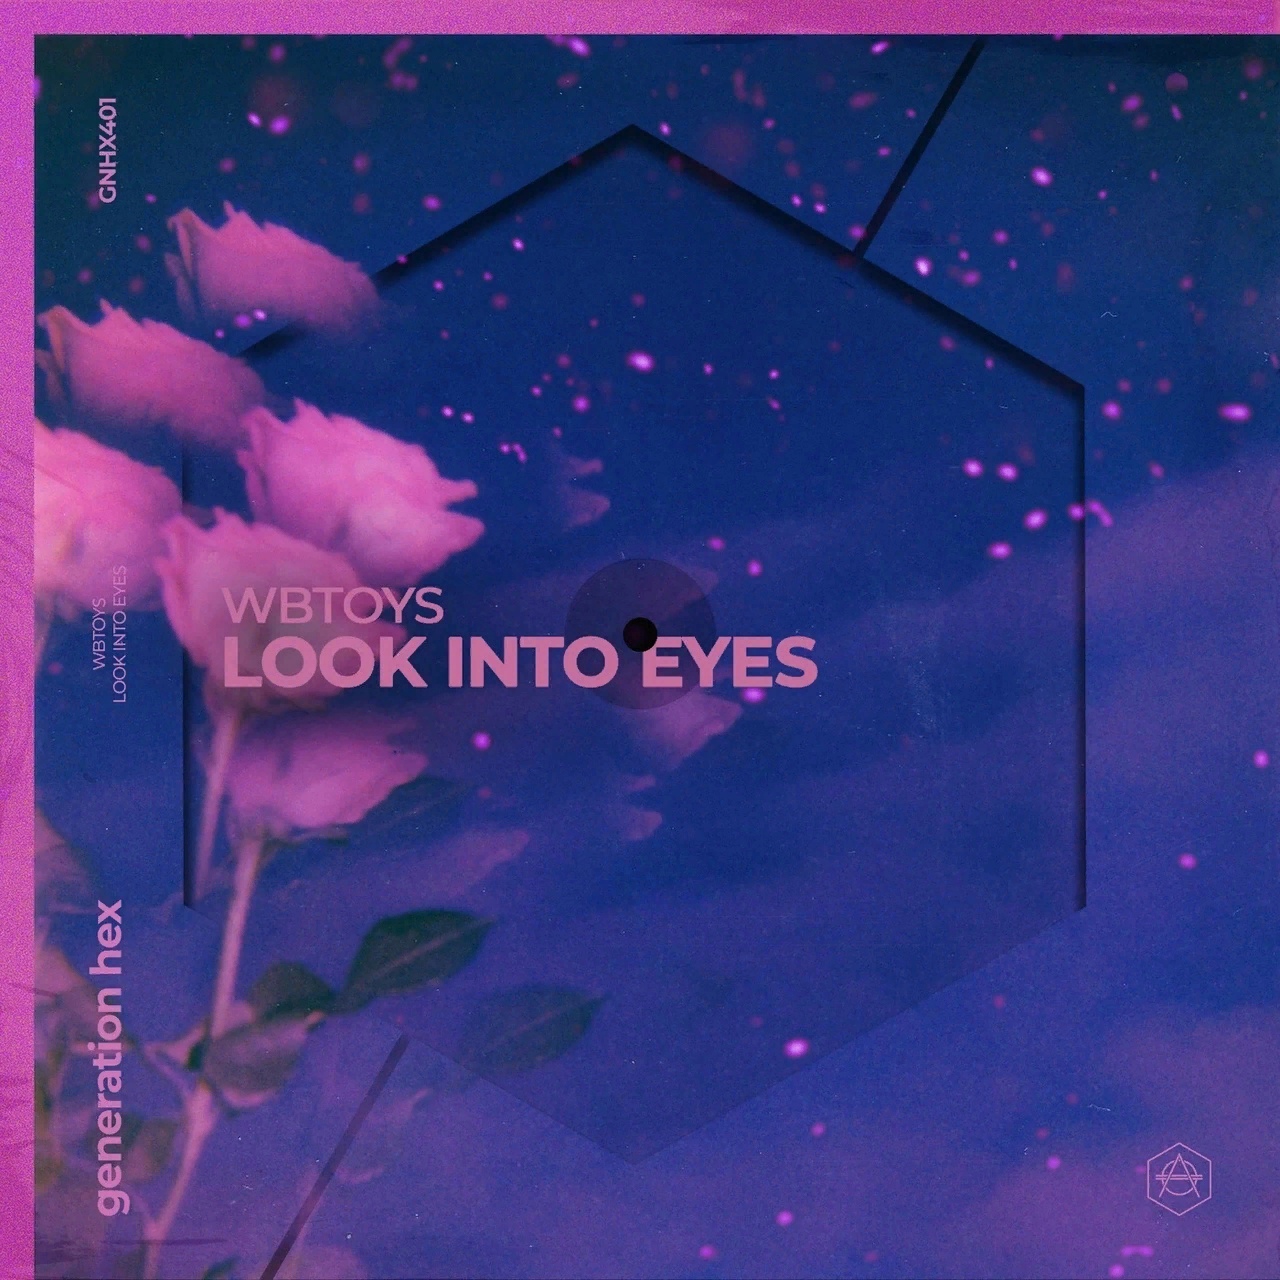 WbToys — Look Into Eyes cover artwork